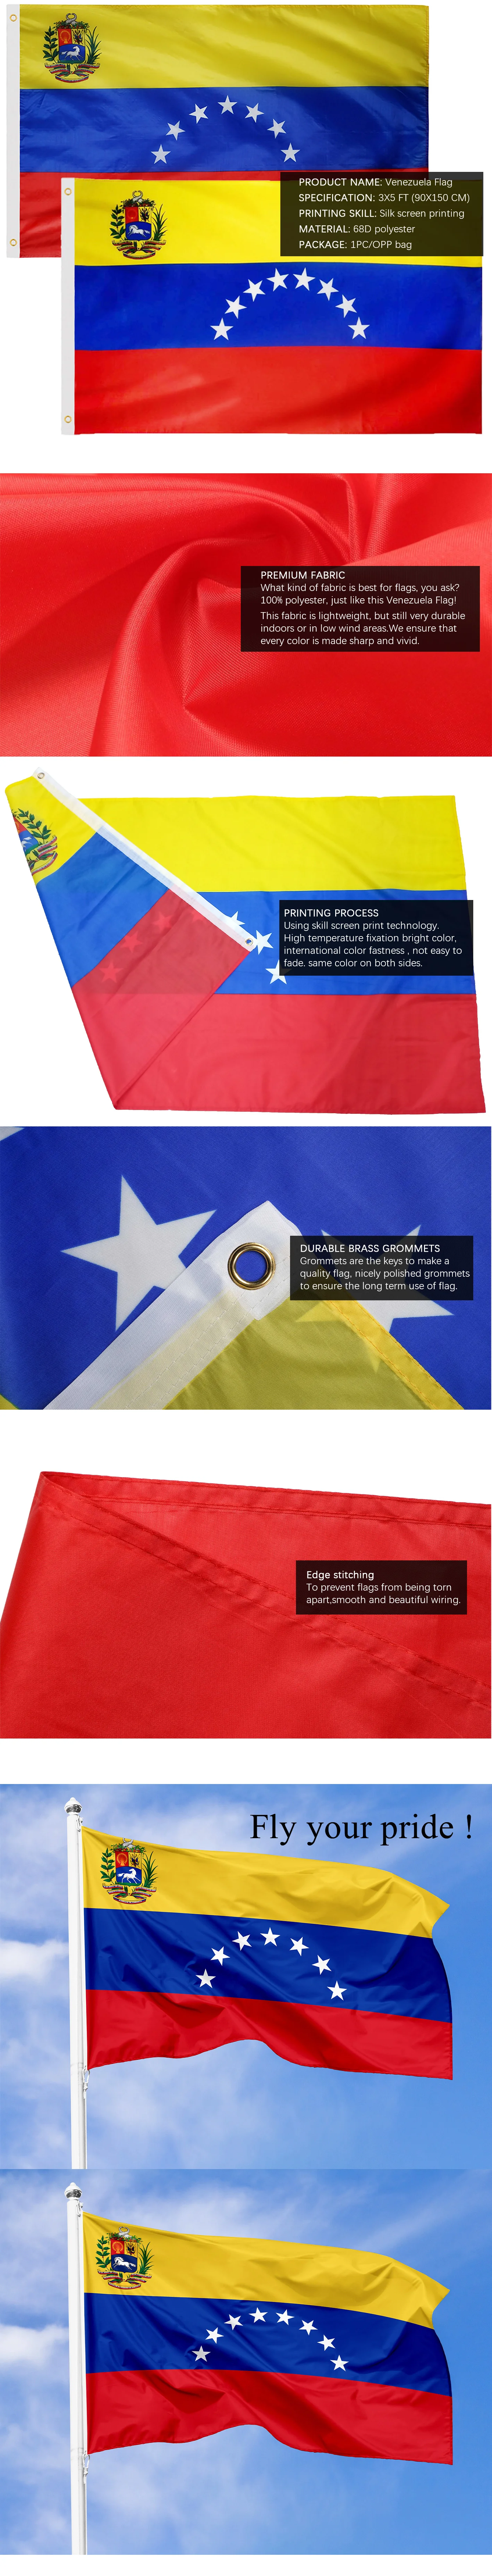 Venezuela 8 Stars Flag 5 x 3 FT South America 100% Polyester With Eyelets